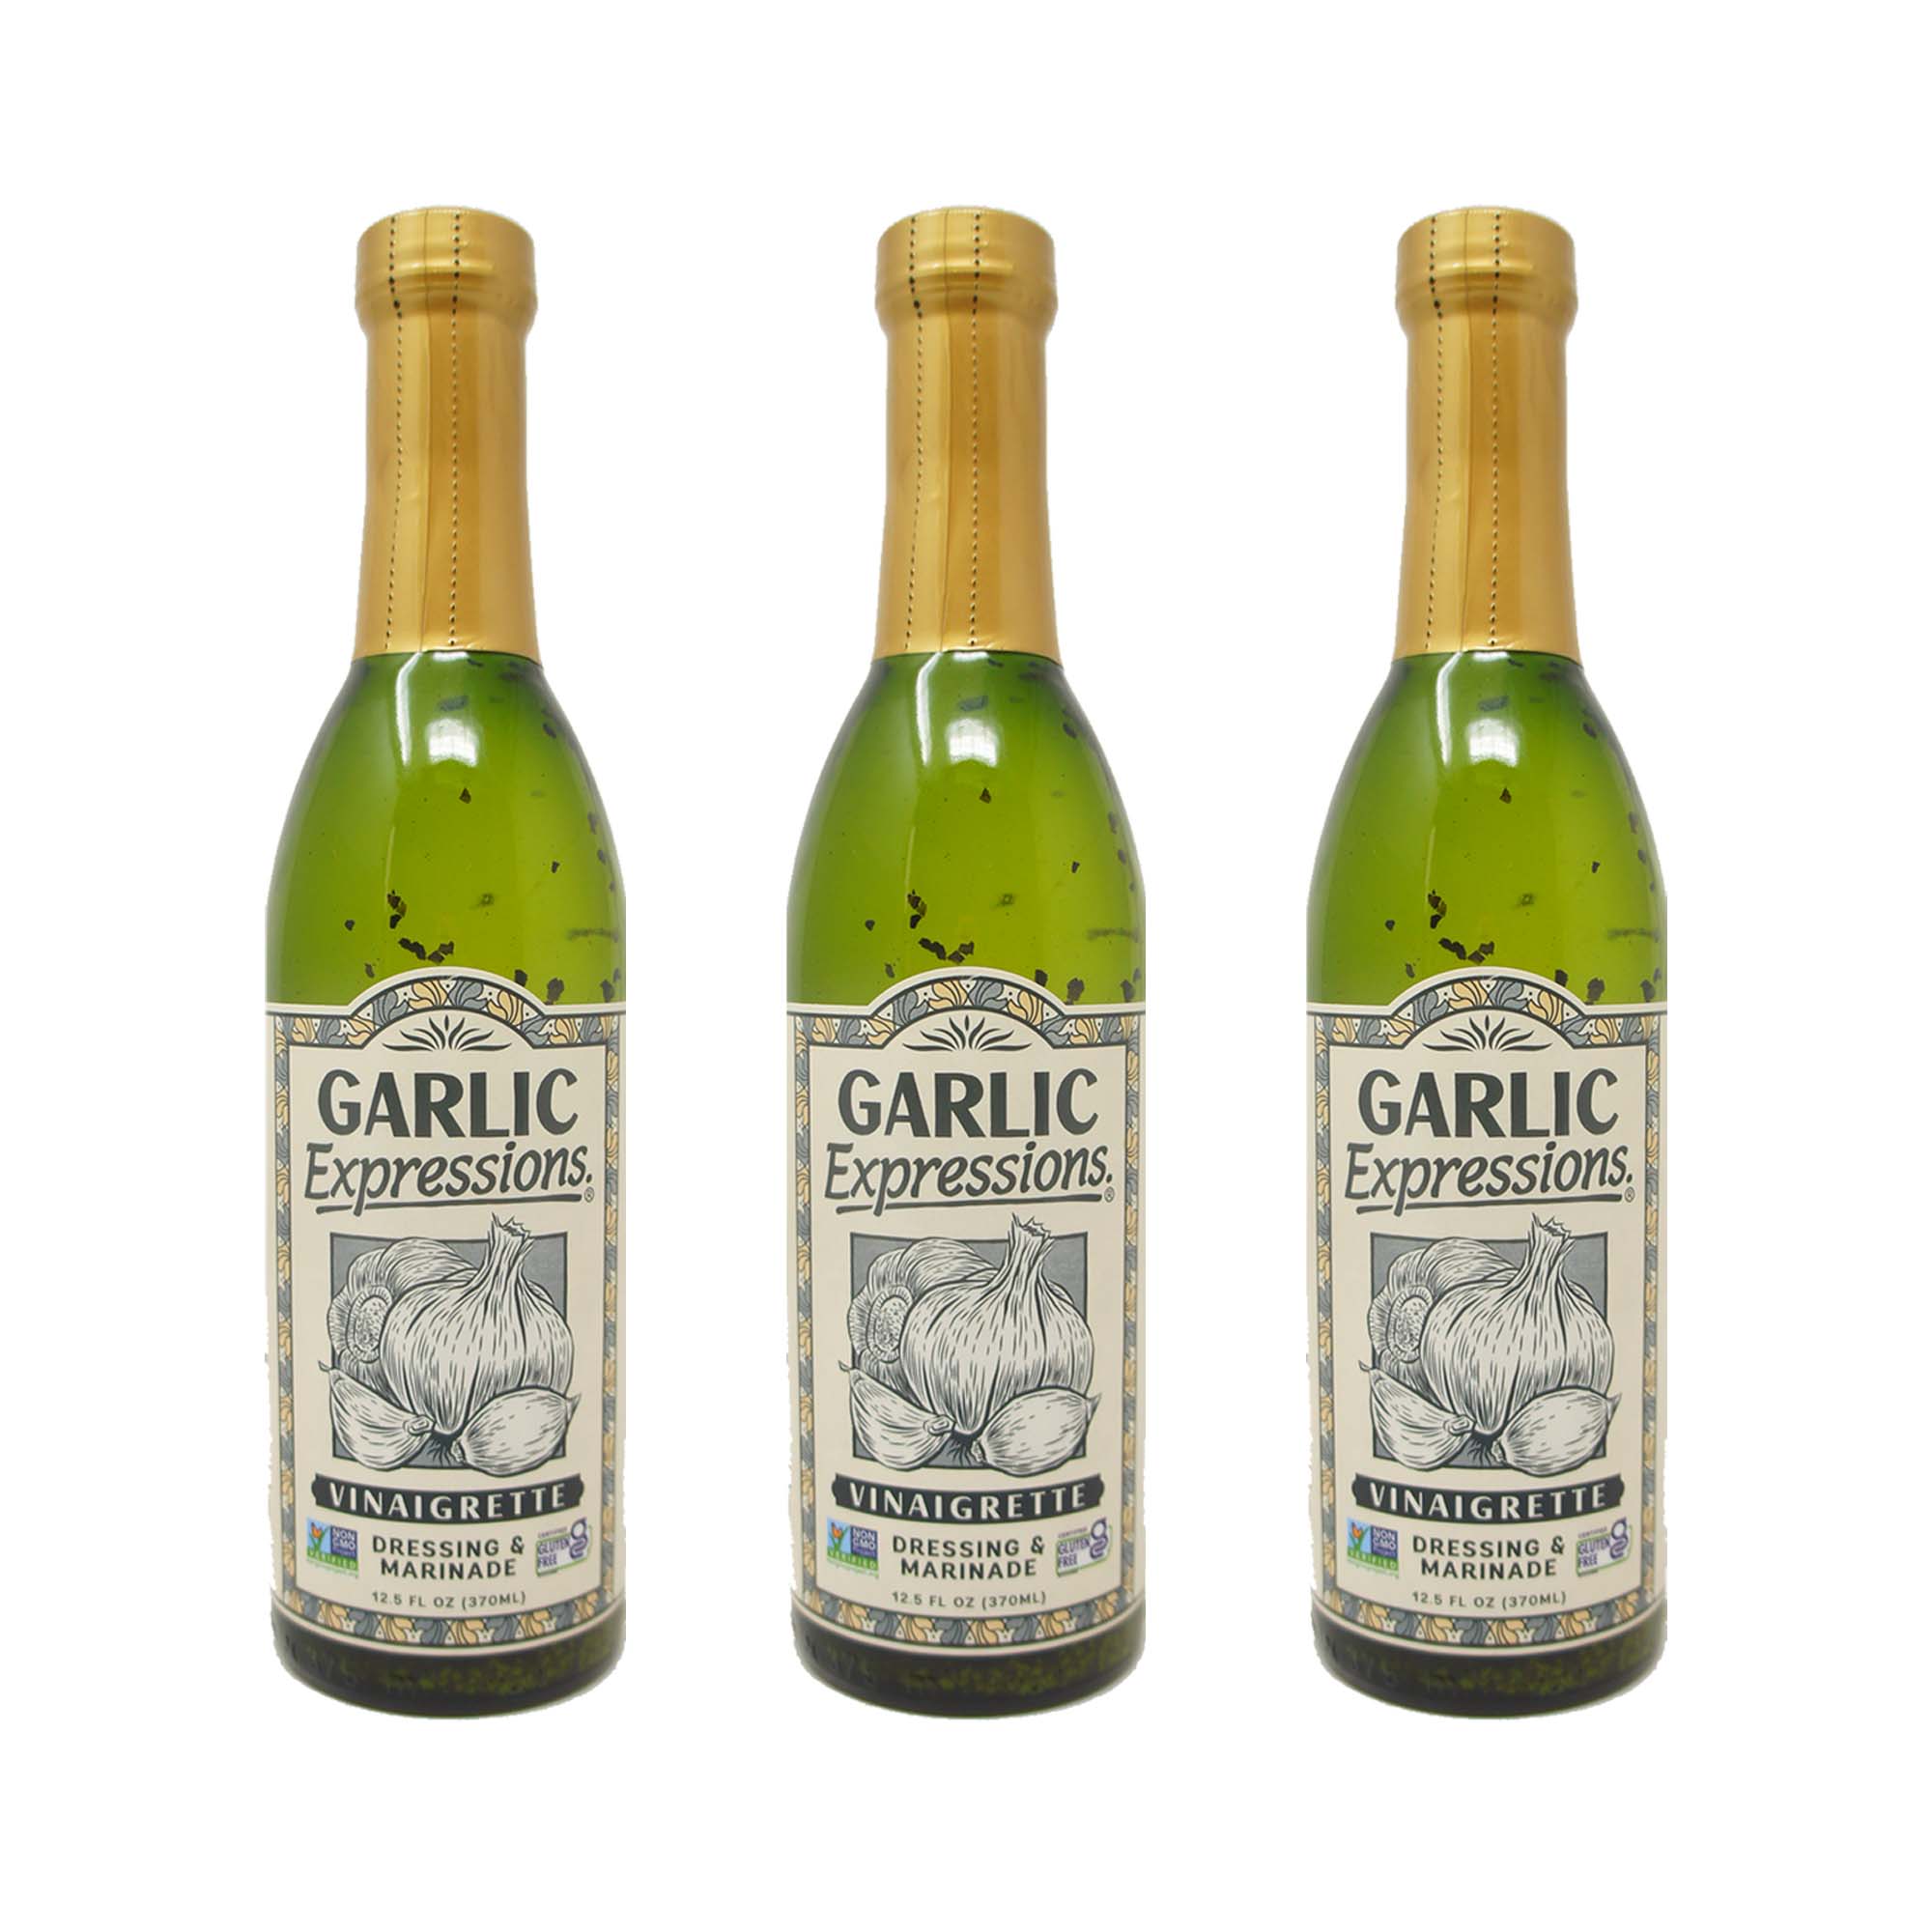 Garlic Expressions Vinaigrette, Salad Dressing & Marinade, 3 Pack